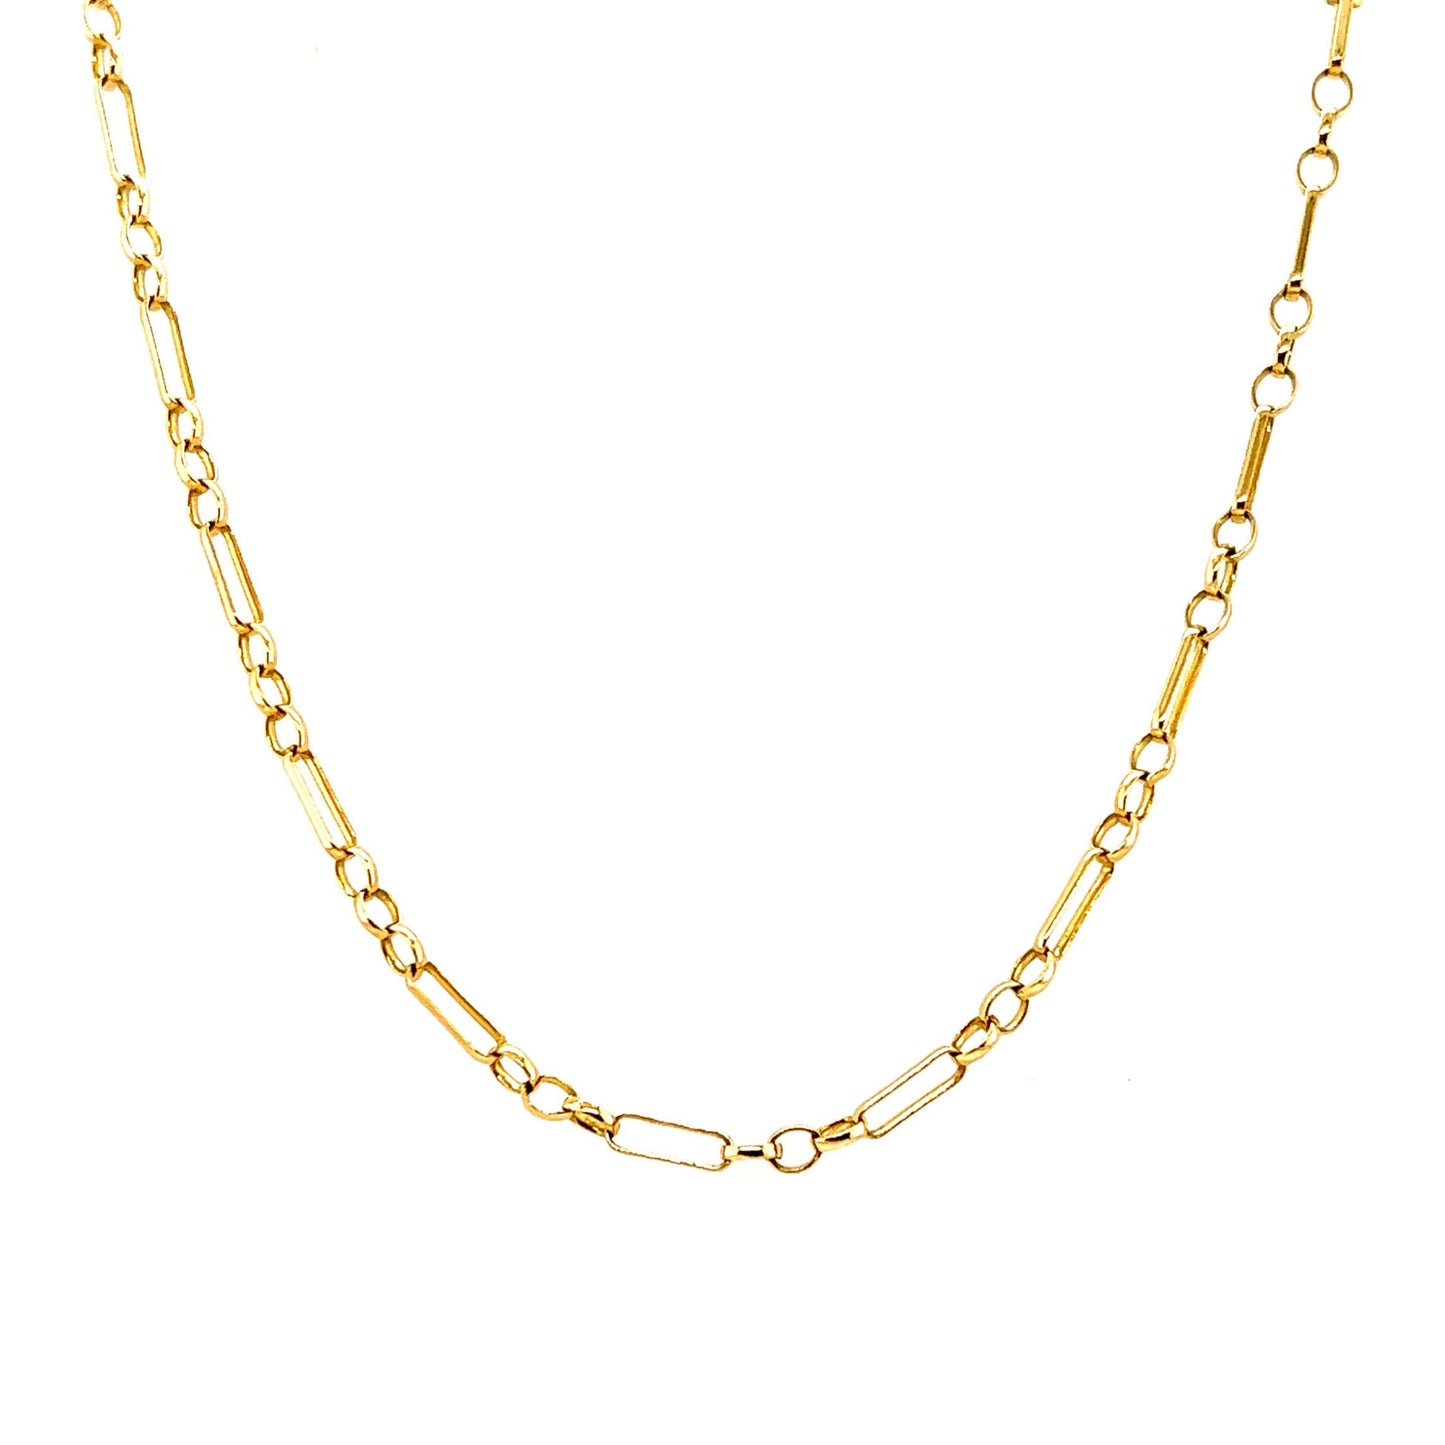 Metier 9KT Yellow Gold Light Eiffel Chain Necklace